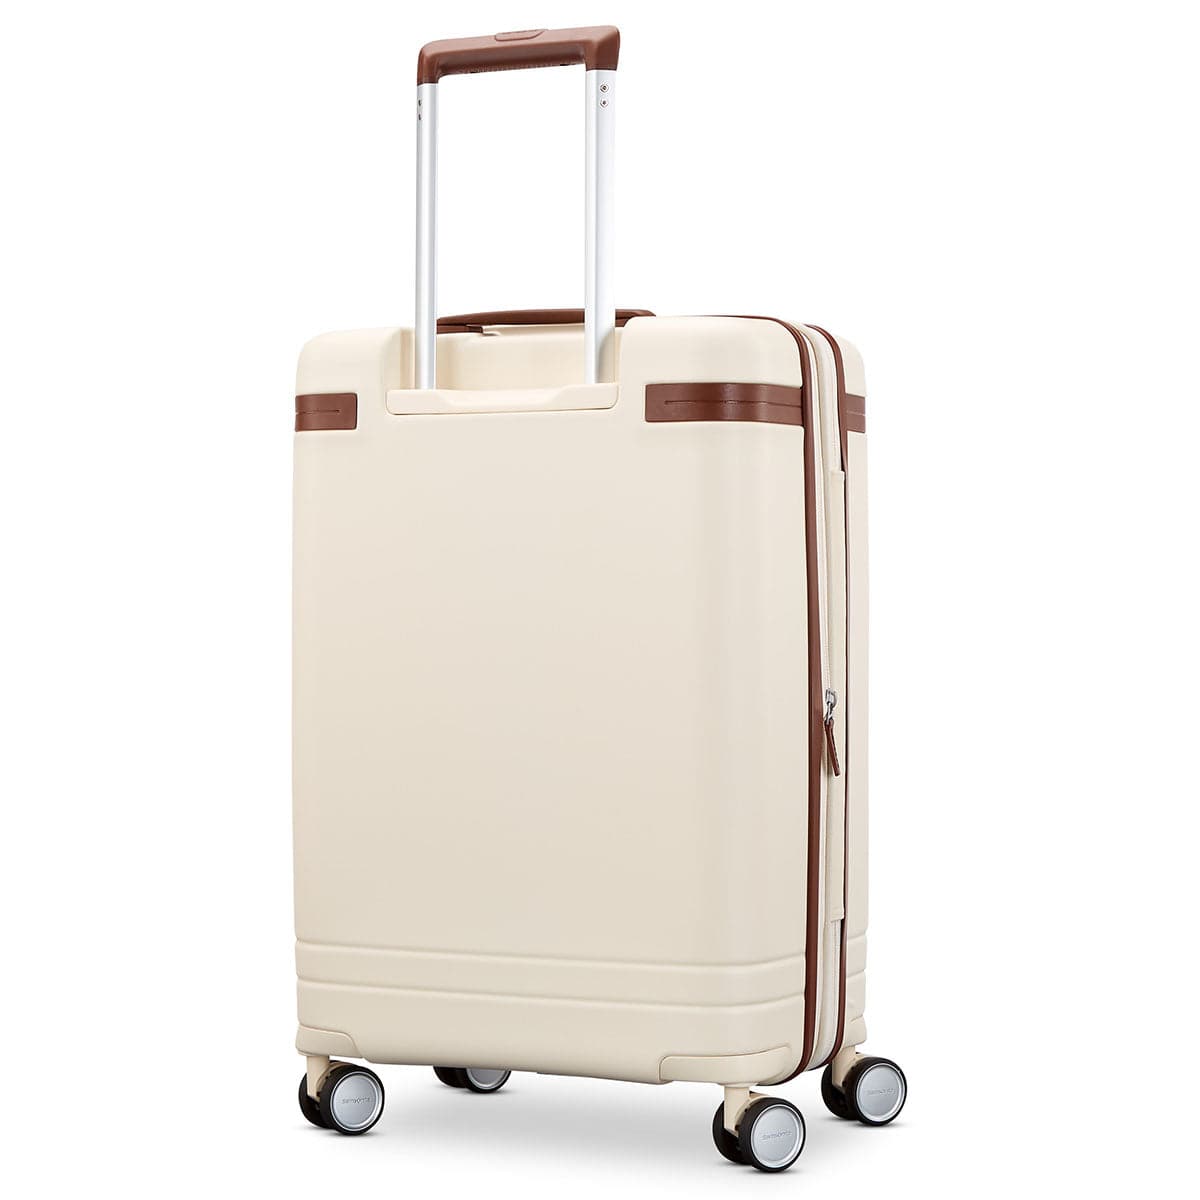 Samsonite Virtuosa Expandale Carry On Luggage